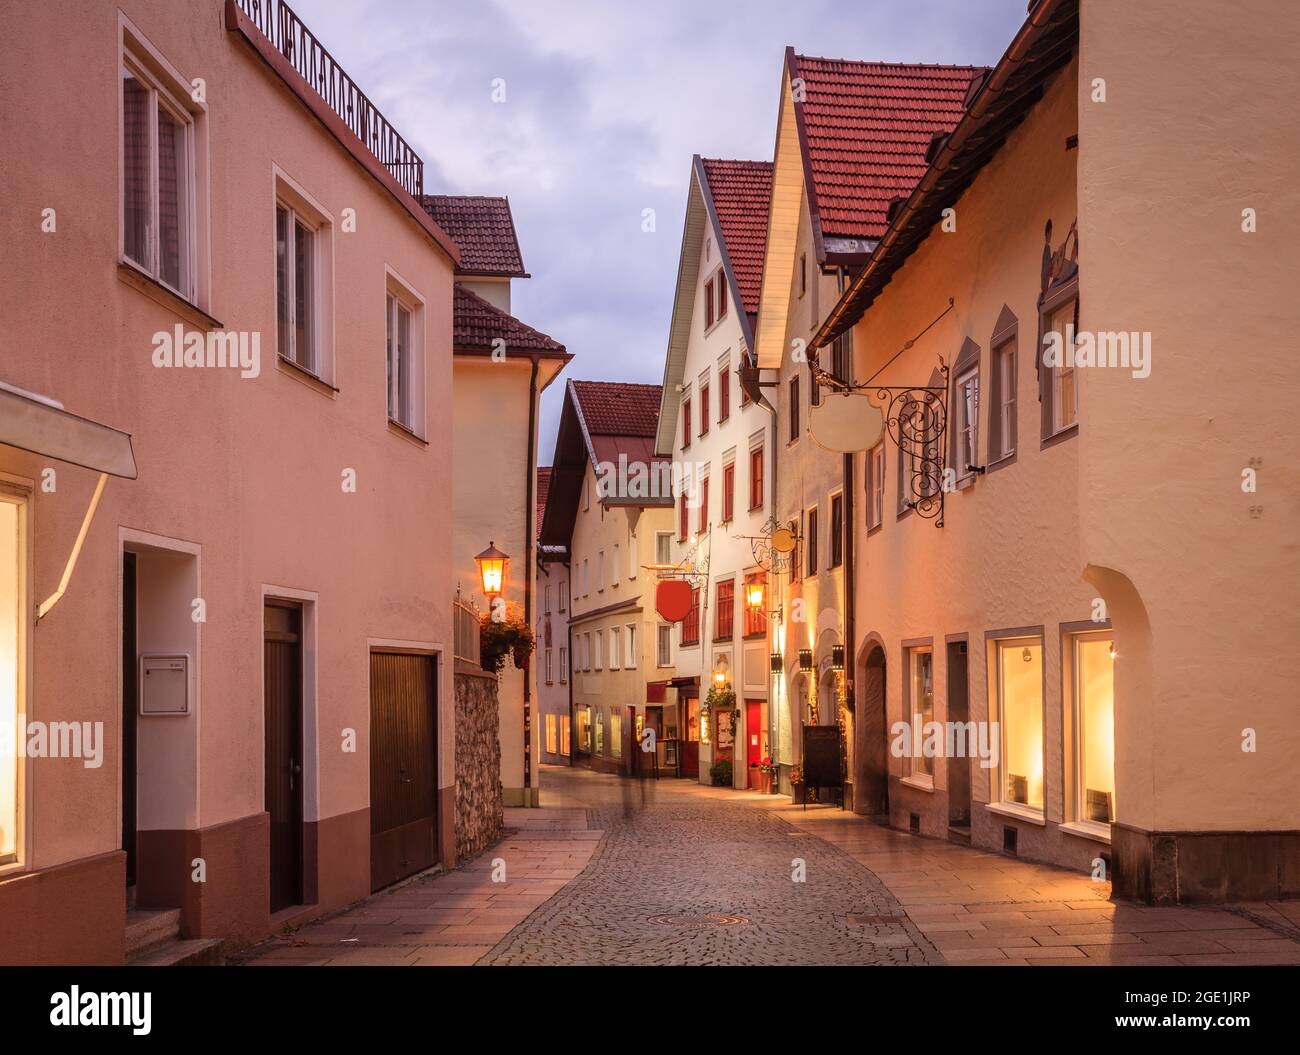 Evening street scene in the city of Fussen, Germany Stock Photo